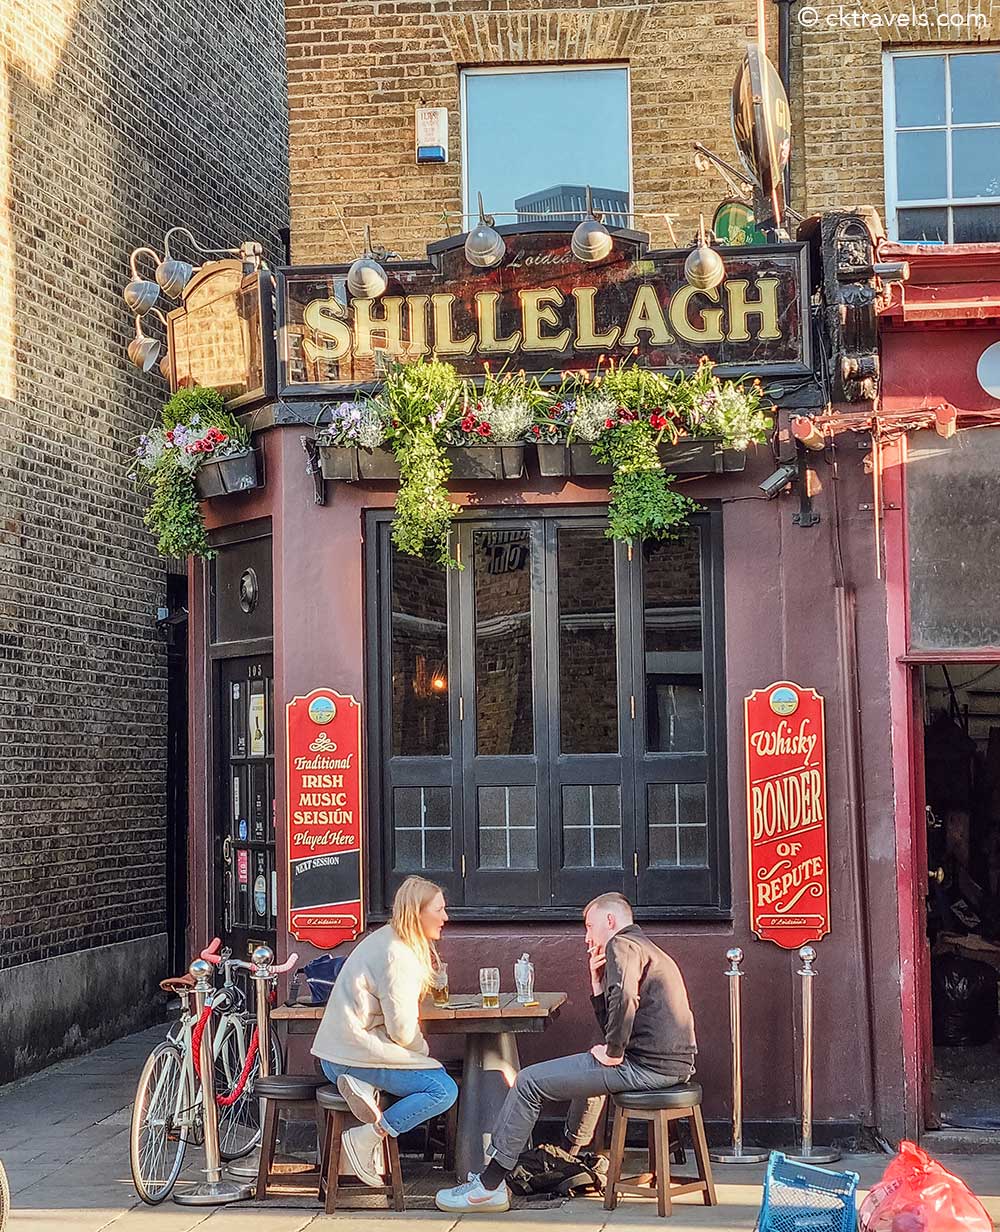 The Auld Shillelagh pub